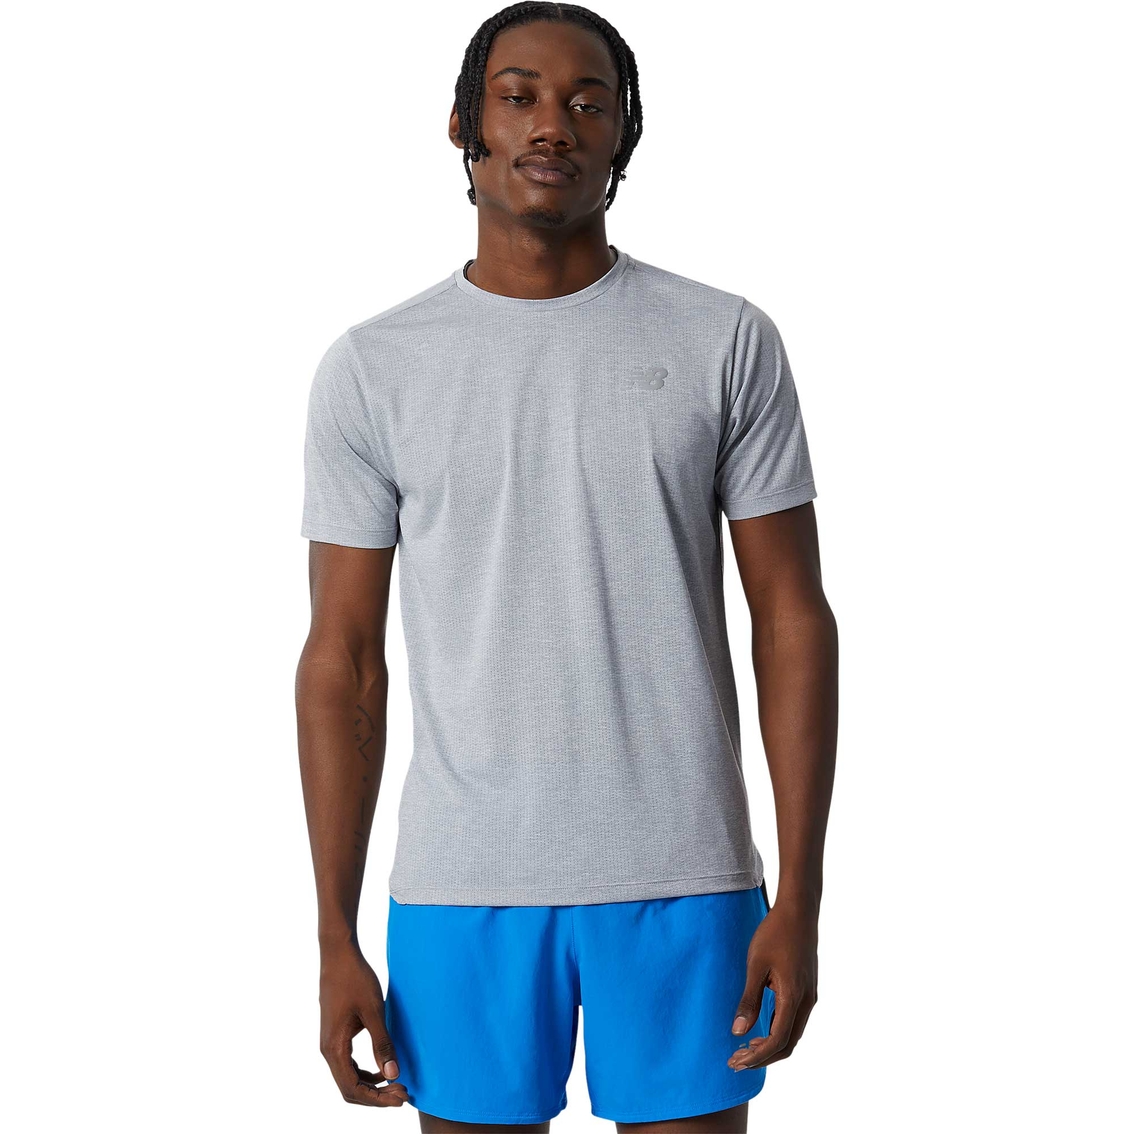 New Balance Impact Run Shirt | Shirts | Clothing & Accessories | Shop ...